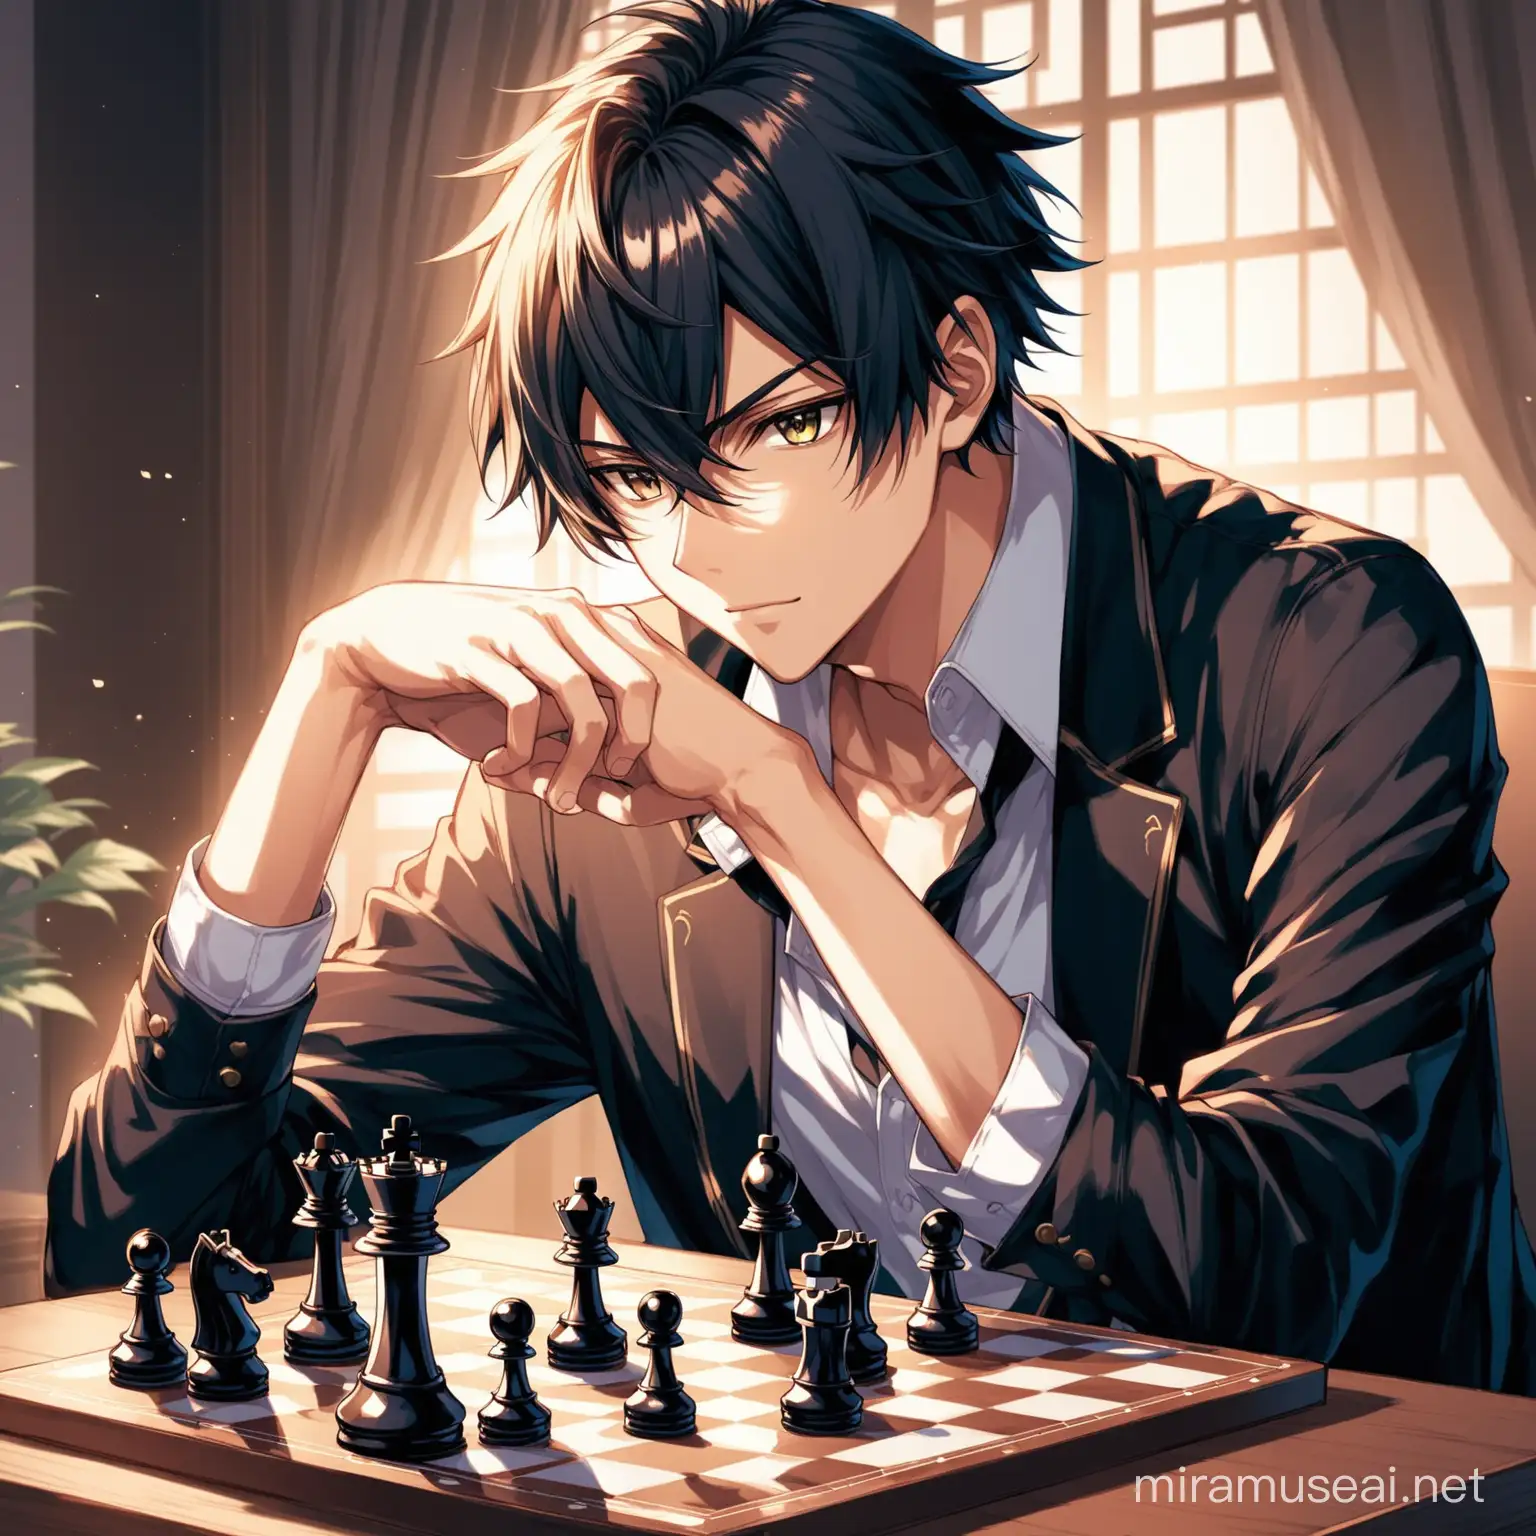 Cool Anime Boy Playing Chess